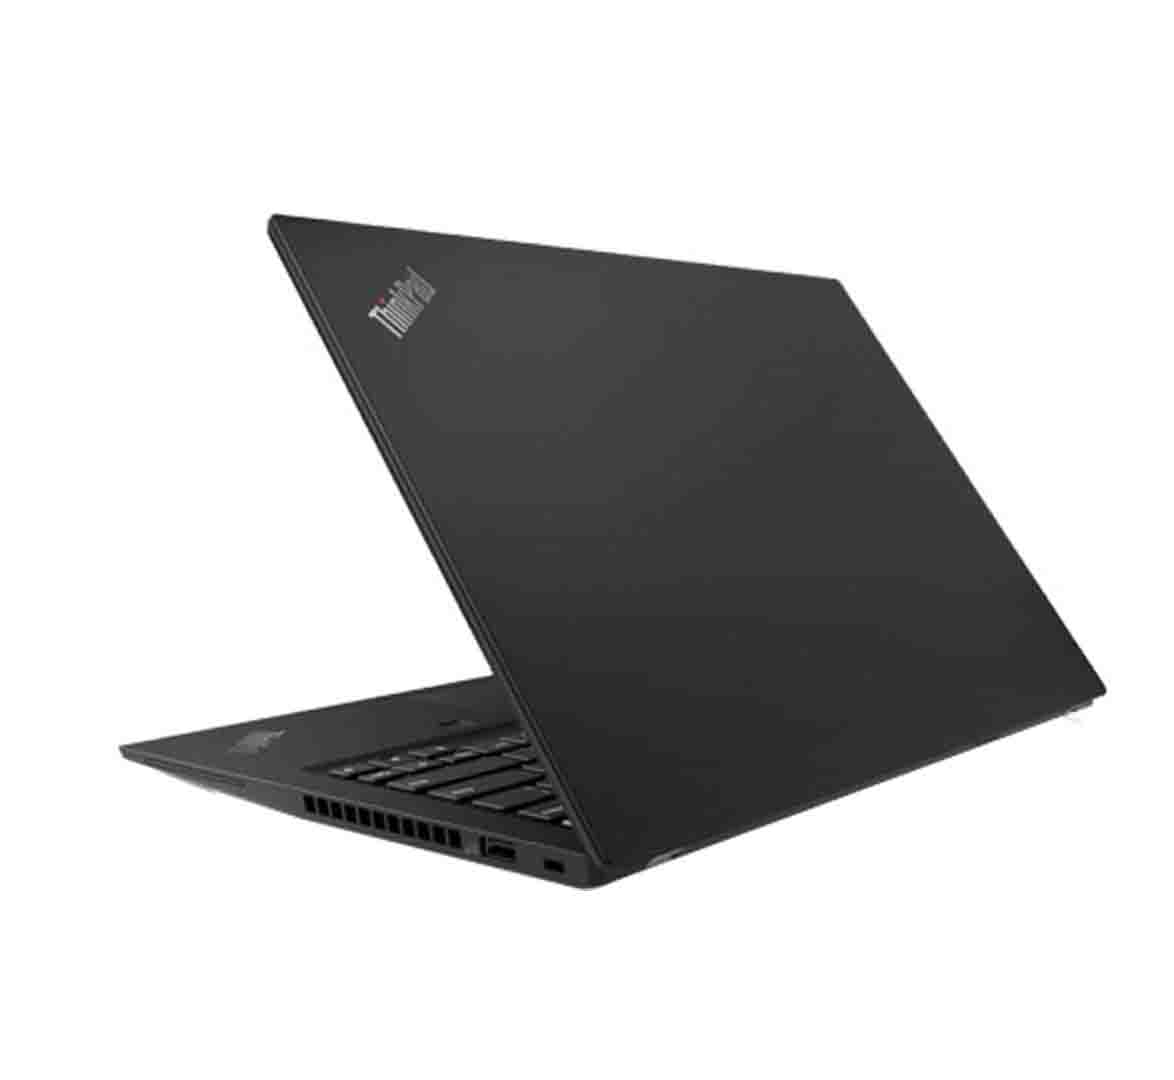 Lenovo ThinkPad T490s Business Laptop, Intel Core i5-8th Generation CPU, 16GB RAM, 512GB SSD, 14 inch Touchscreen, Windows 10 Pro